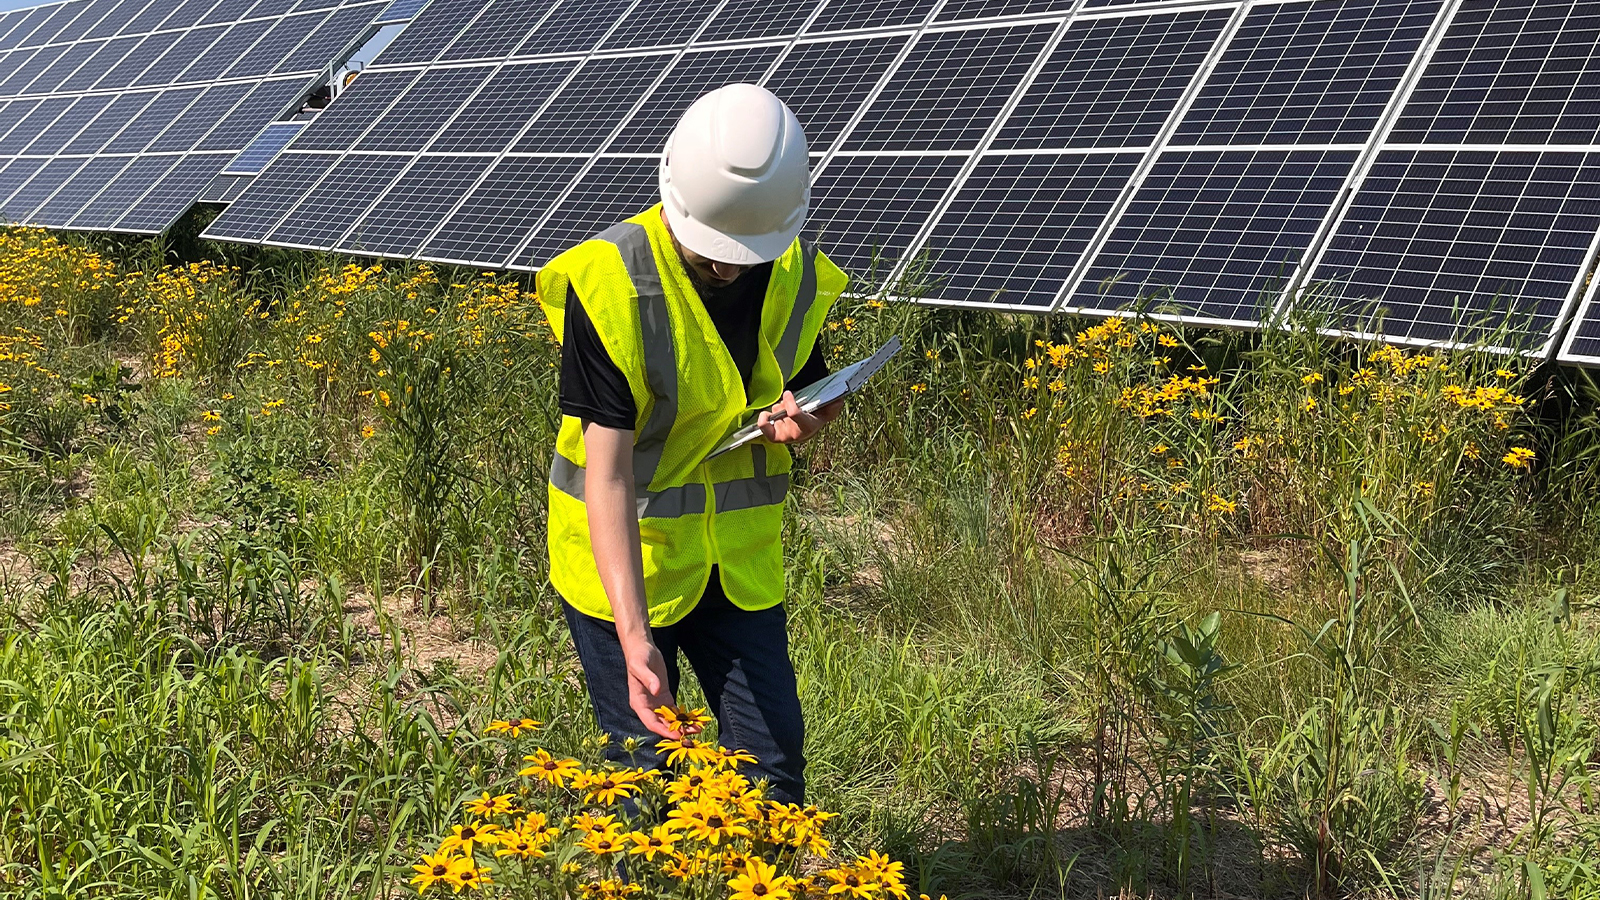 An Argonne scientist surveys for pollinators at a utility-scale solar facility.